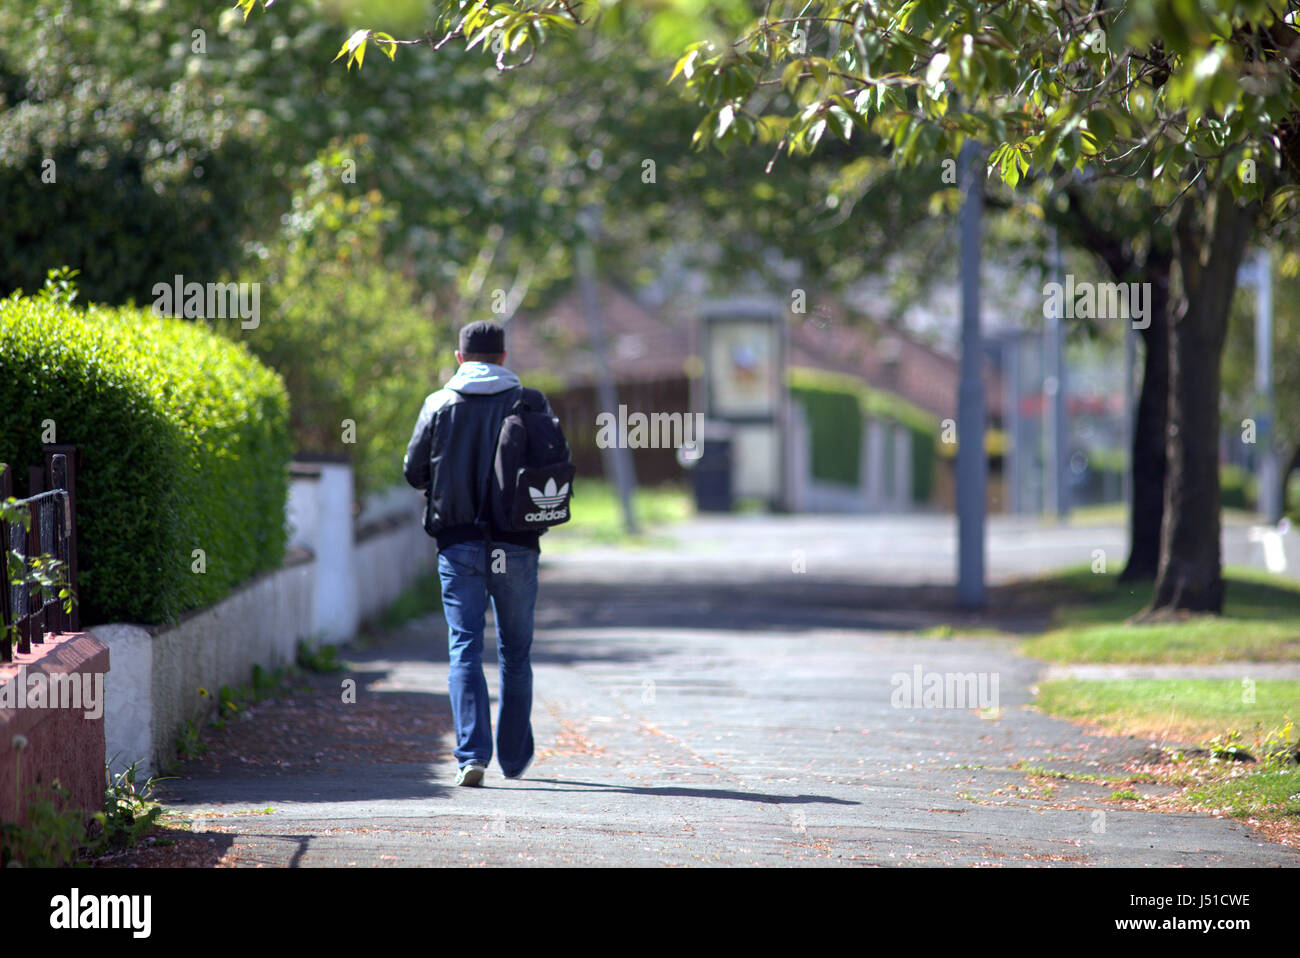 Single man with backpack rucksack on pavement Glasgow street walking pedestrian Stock Photo